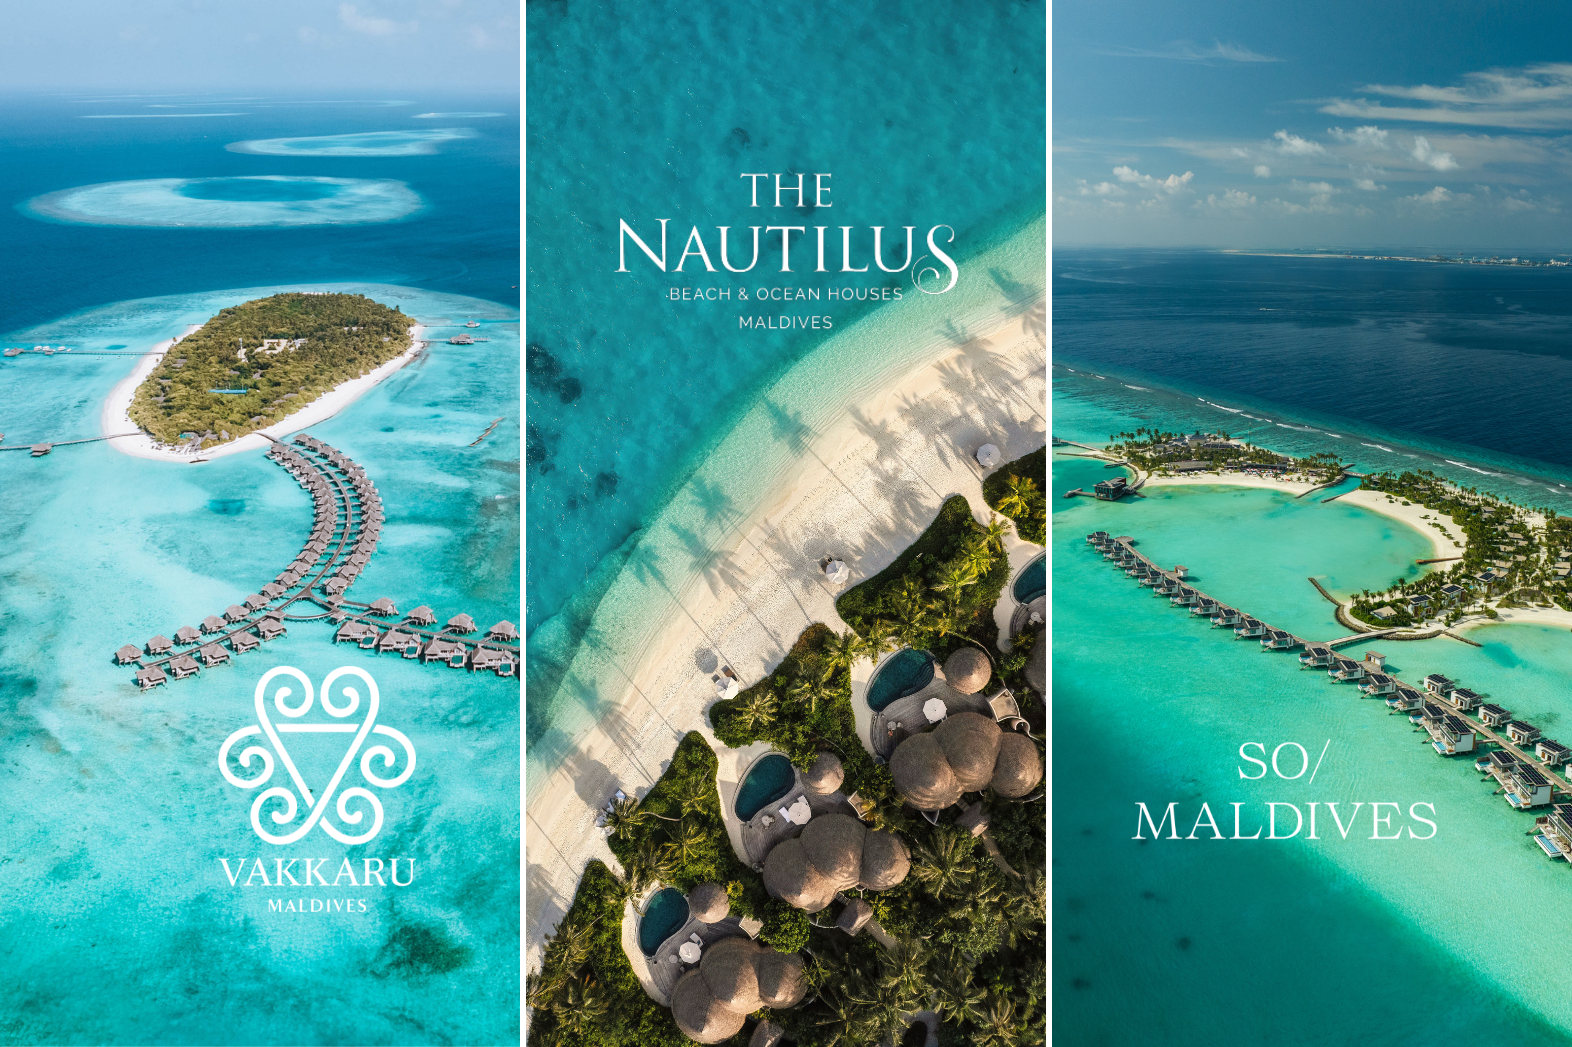 Highlights of the Month: Vakkaru Maldives, The Nautilus & SO/ Maldives